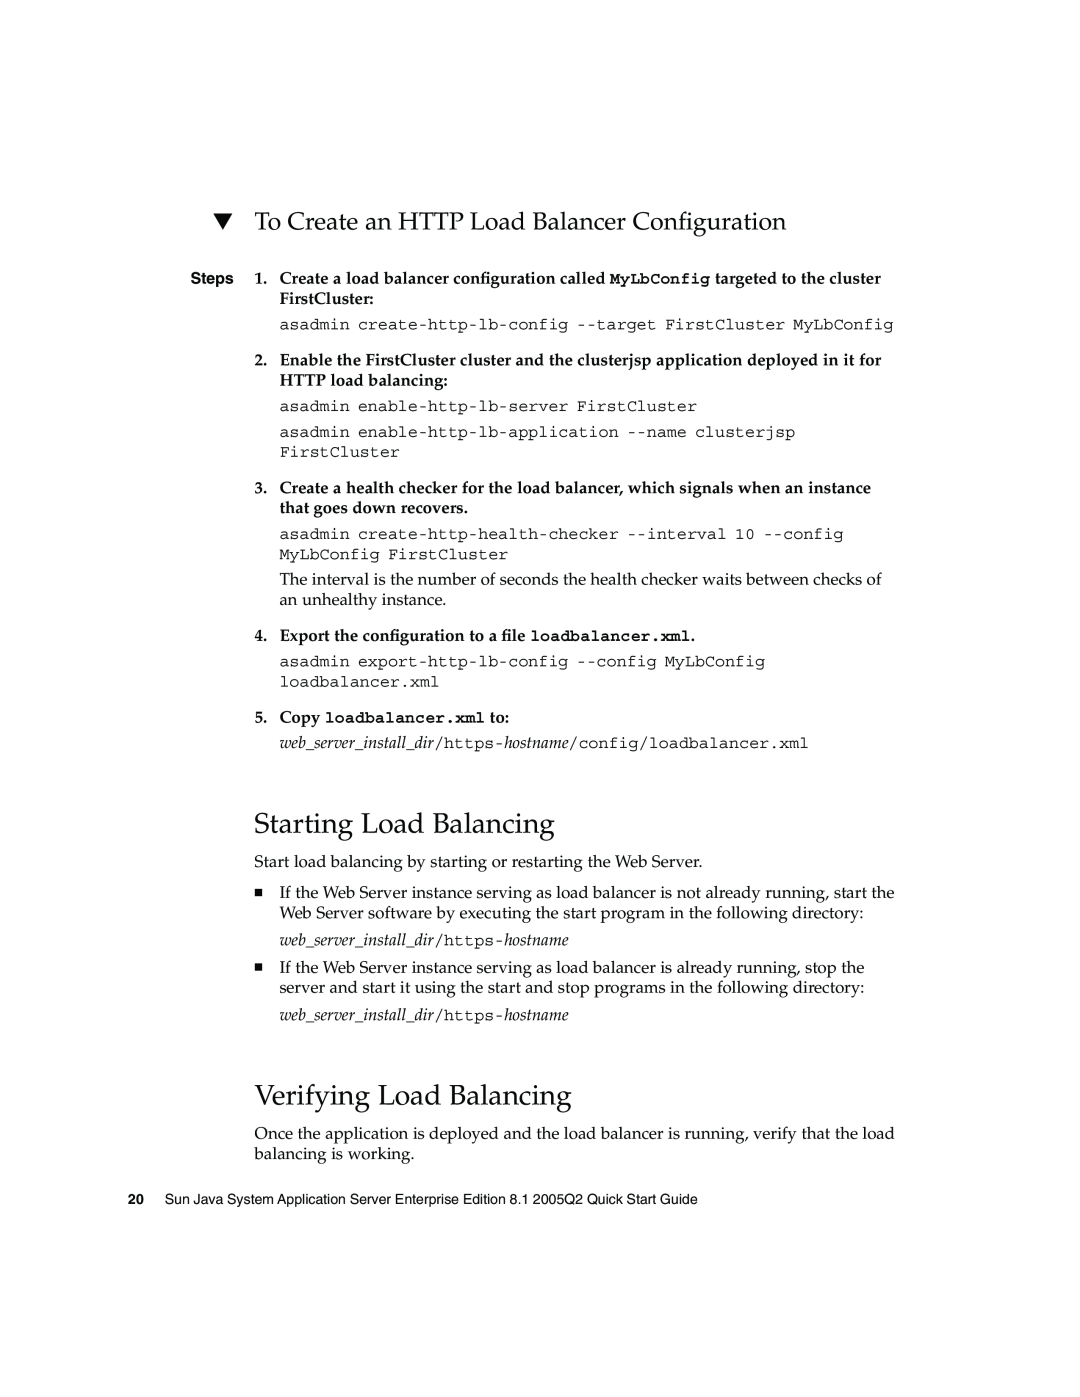 Sun Microsystems 2005Q2 Starting Load Balancing, Verifying Load Balancing, To Create an HTTP Load Balancer Conﬁguration 